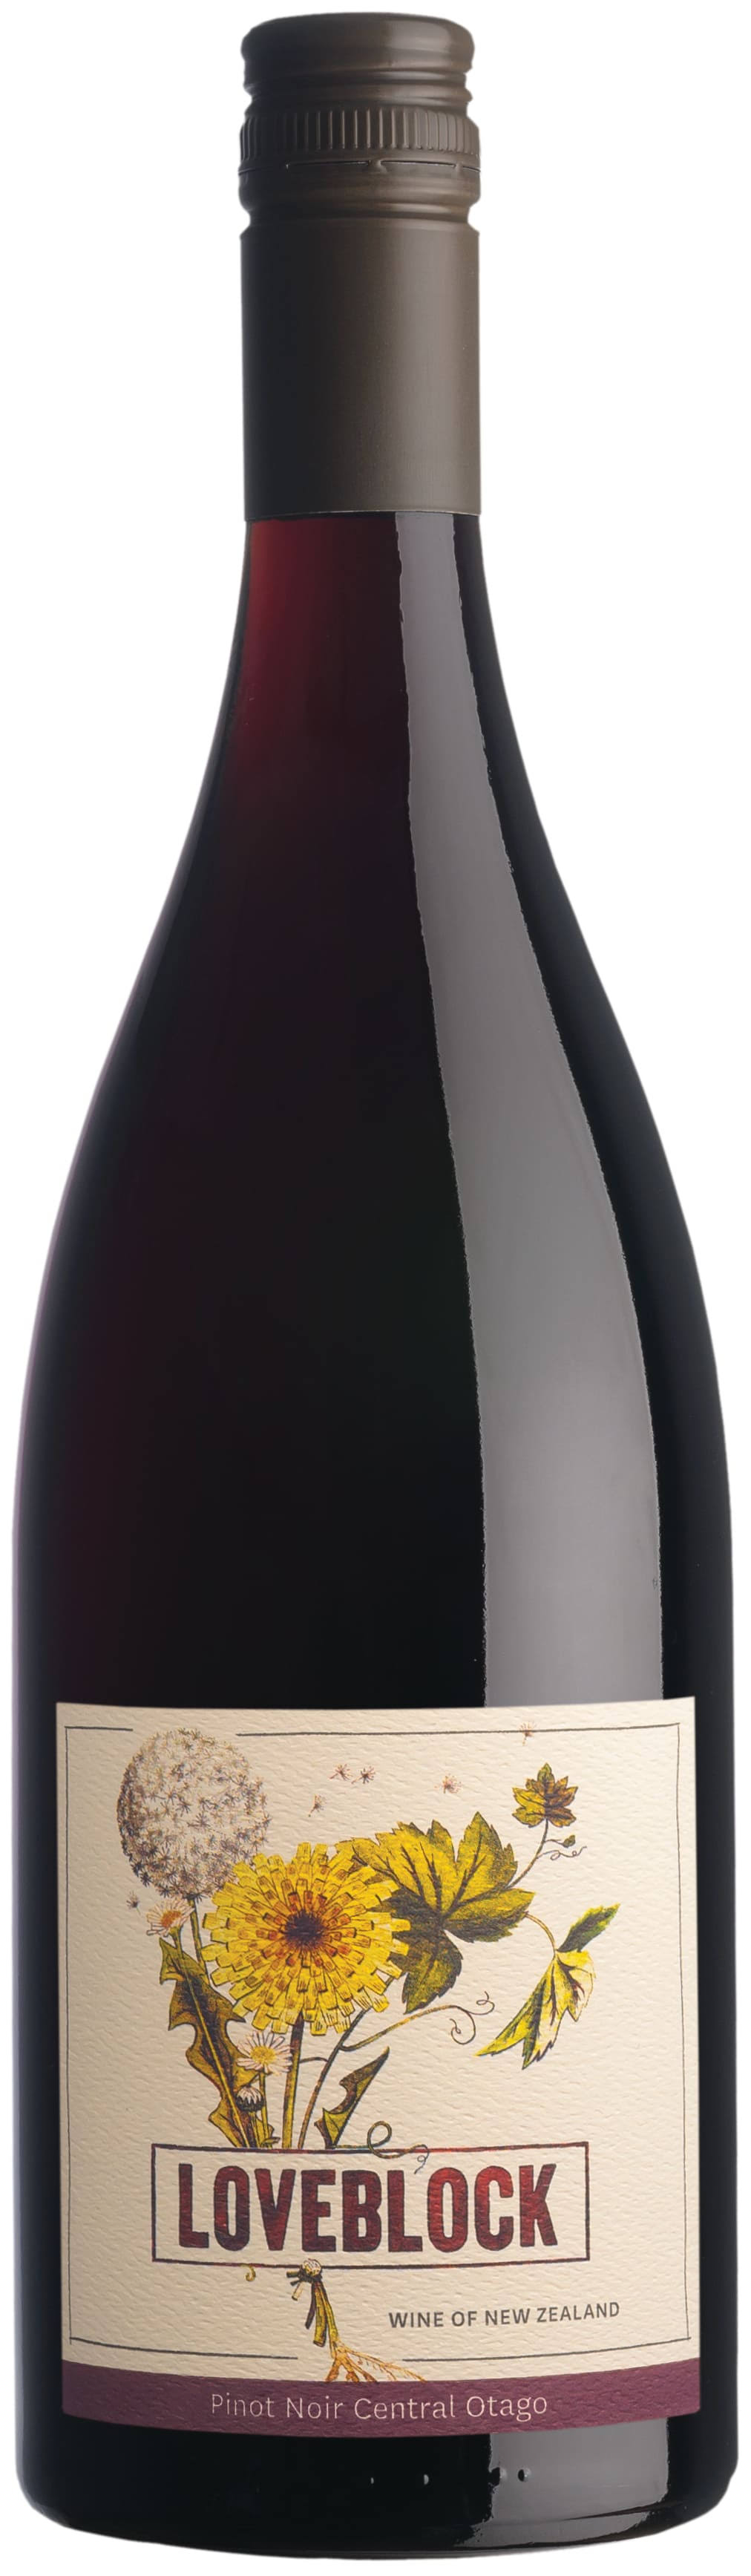 Loveblock Pinot Noir, New Zealand (Vintage Varies) - 750 ml bottle